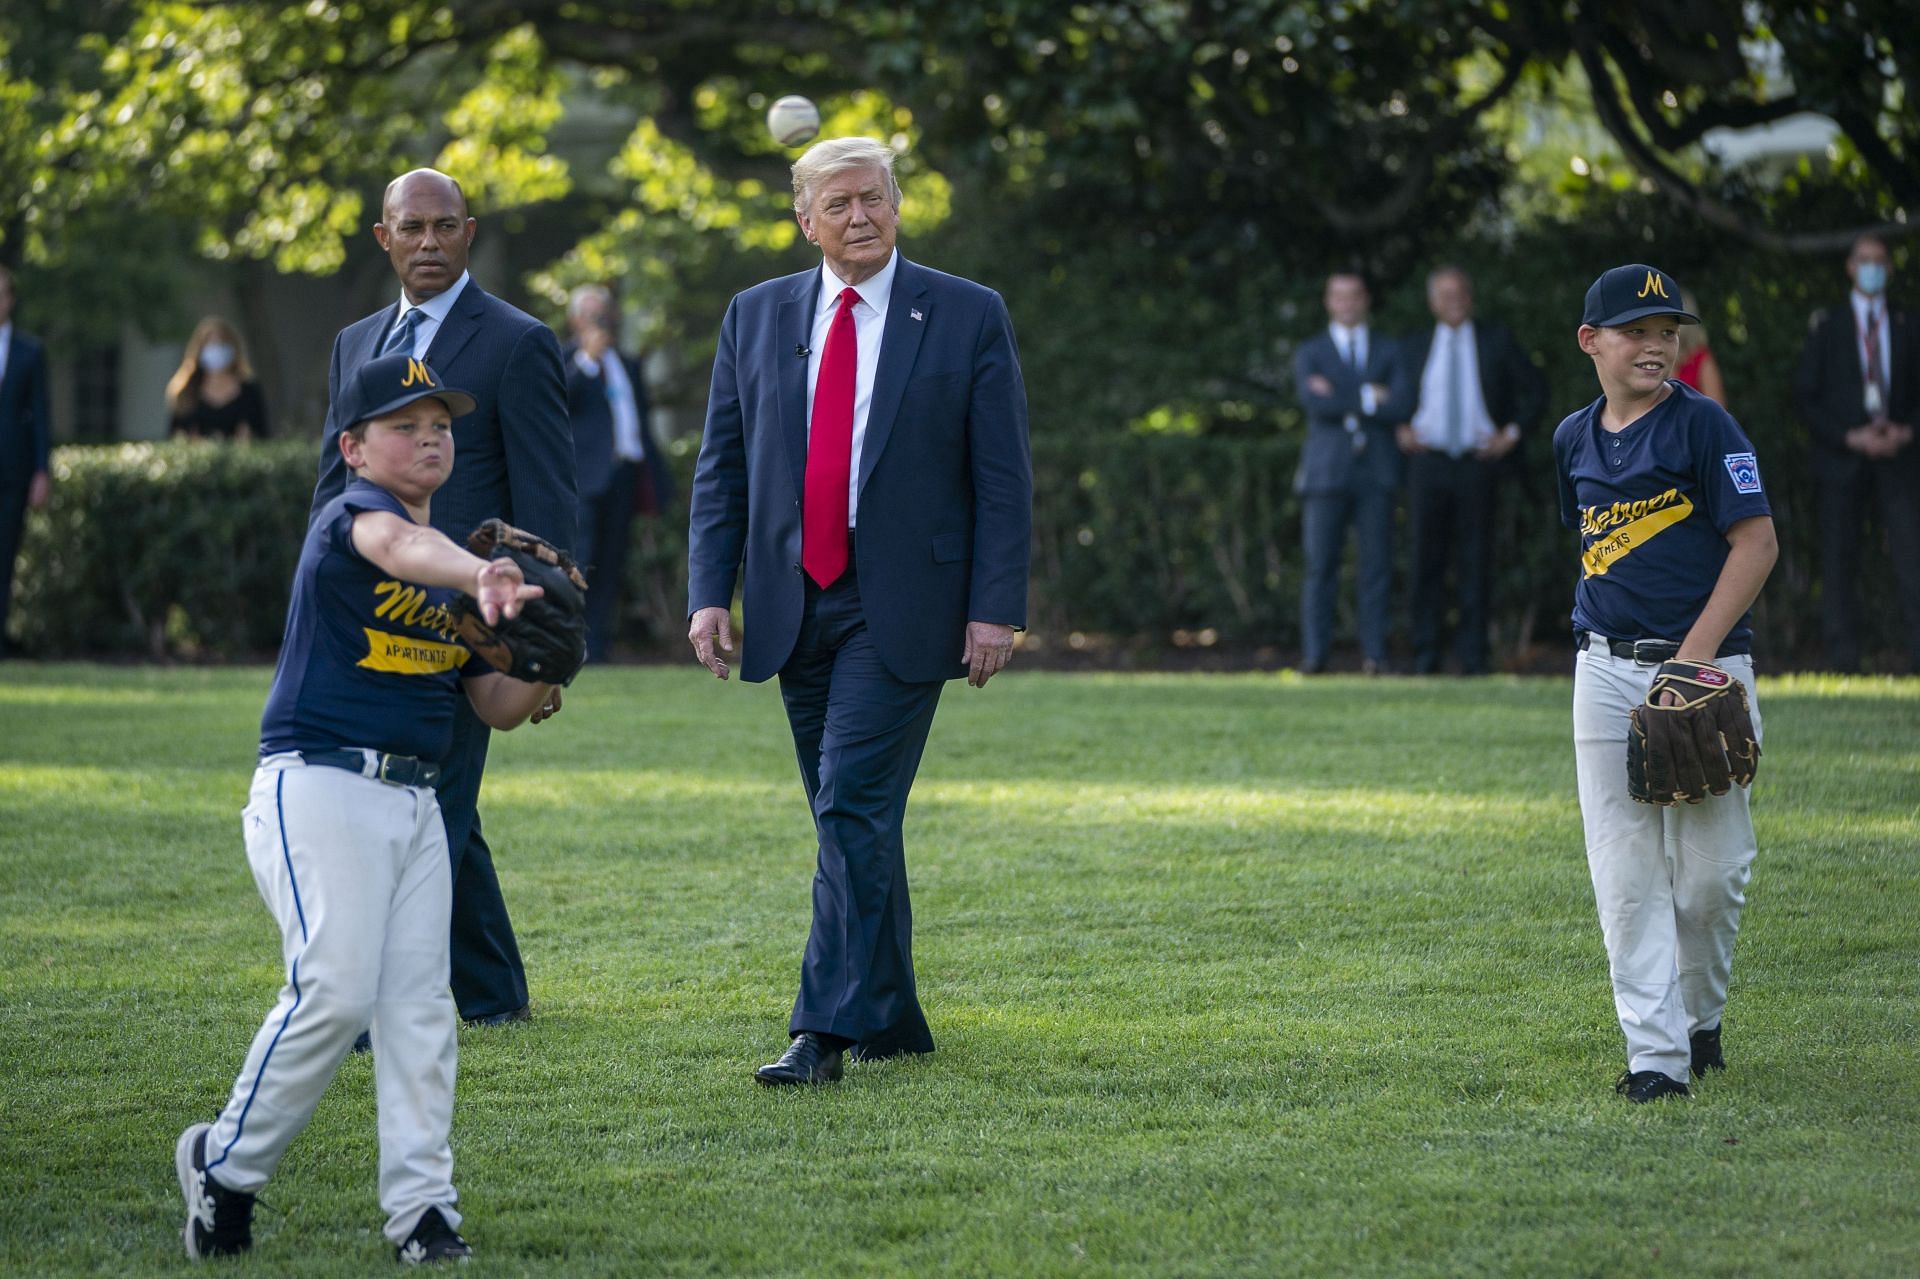 President Trump Marks Major League Baseball